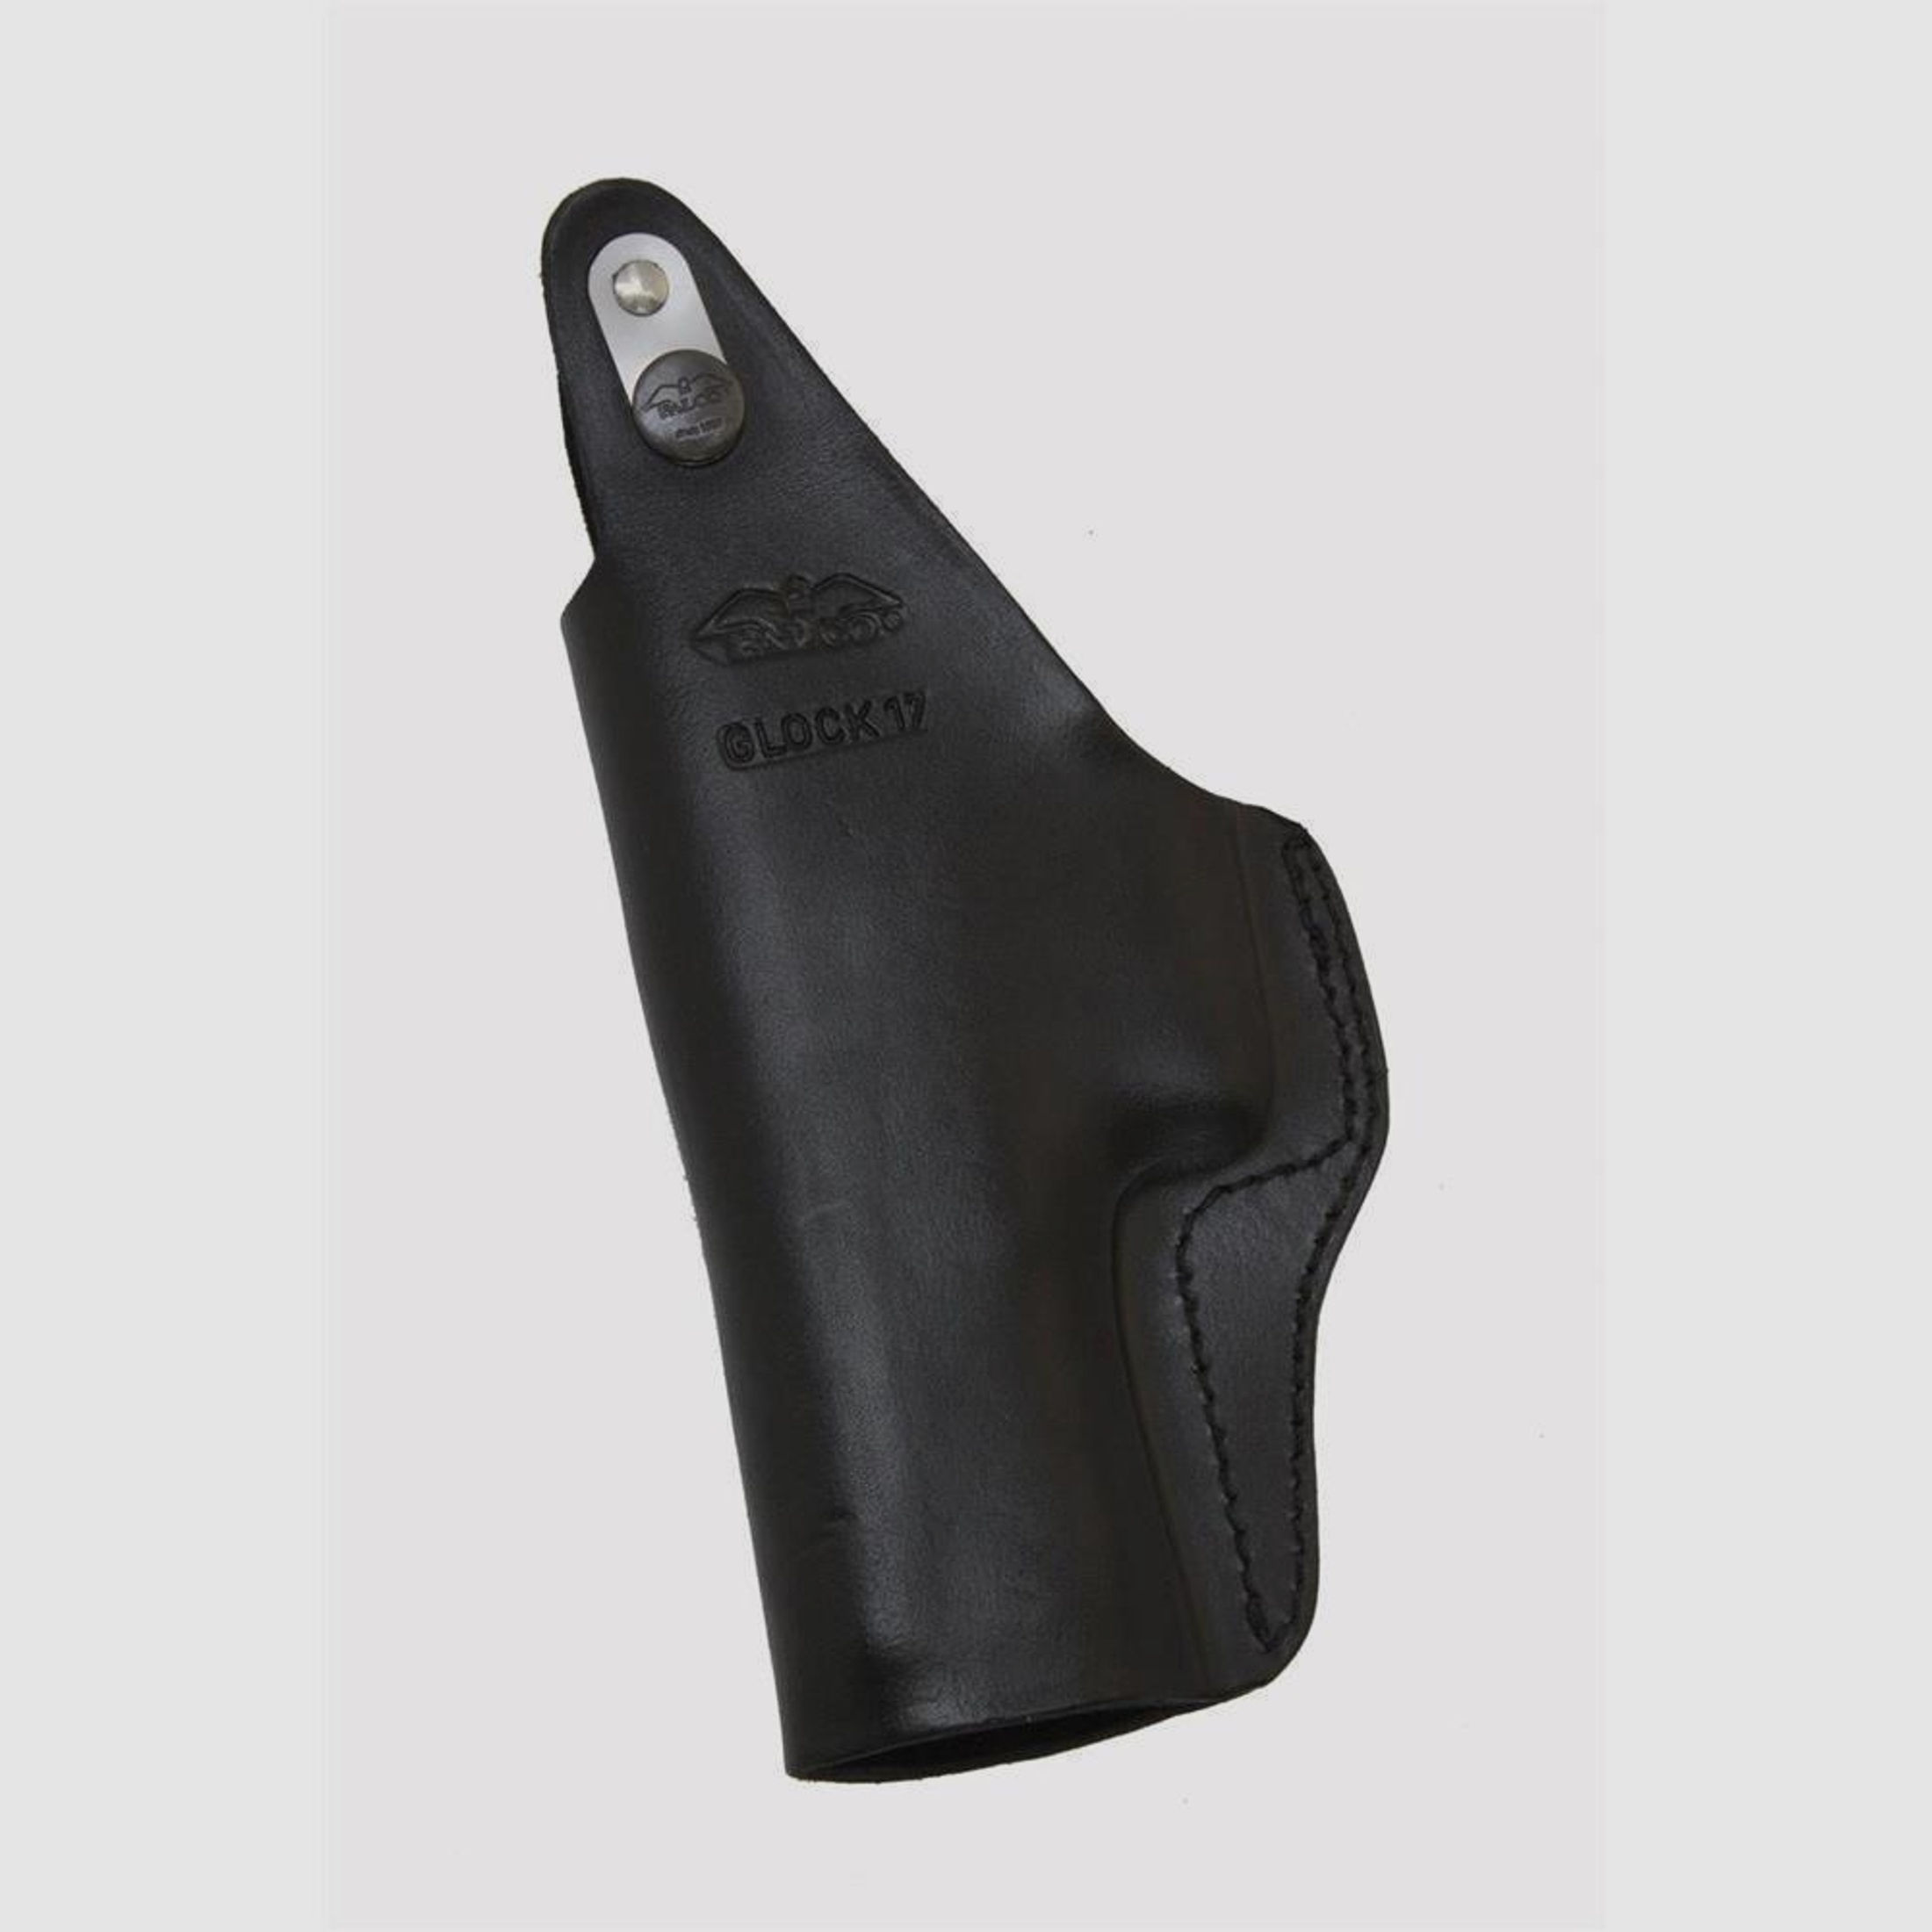 LEDER Innenholster mit Clip Linkshänder-Schwarz Glock 20 /21